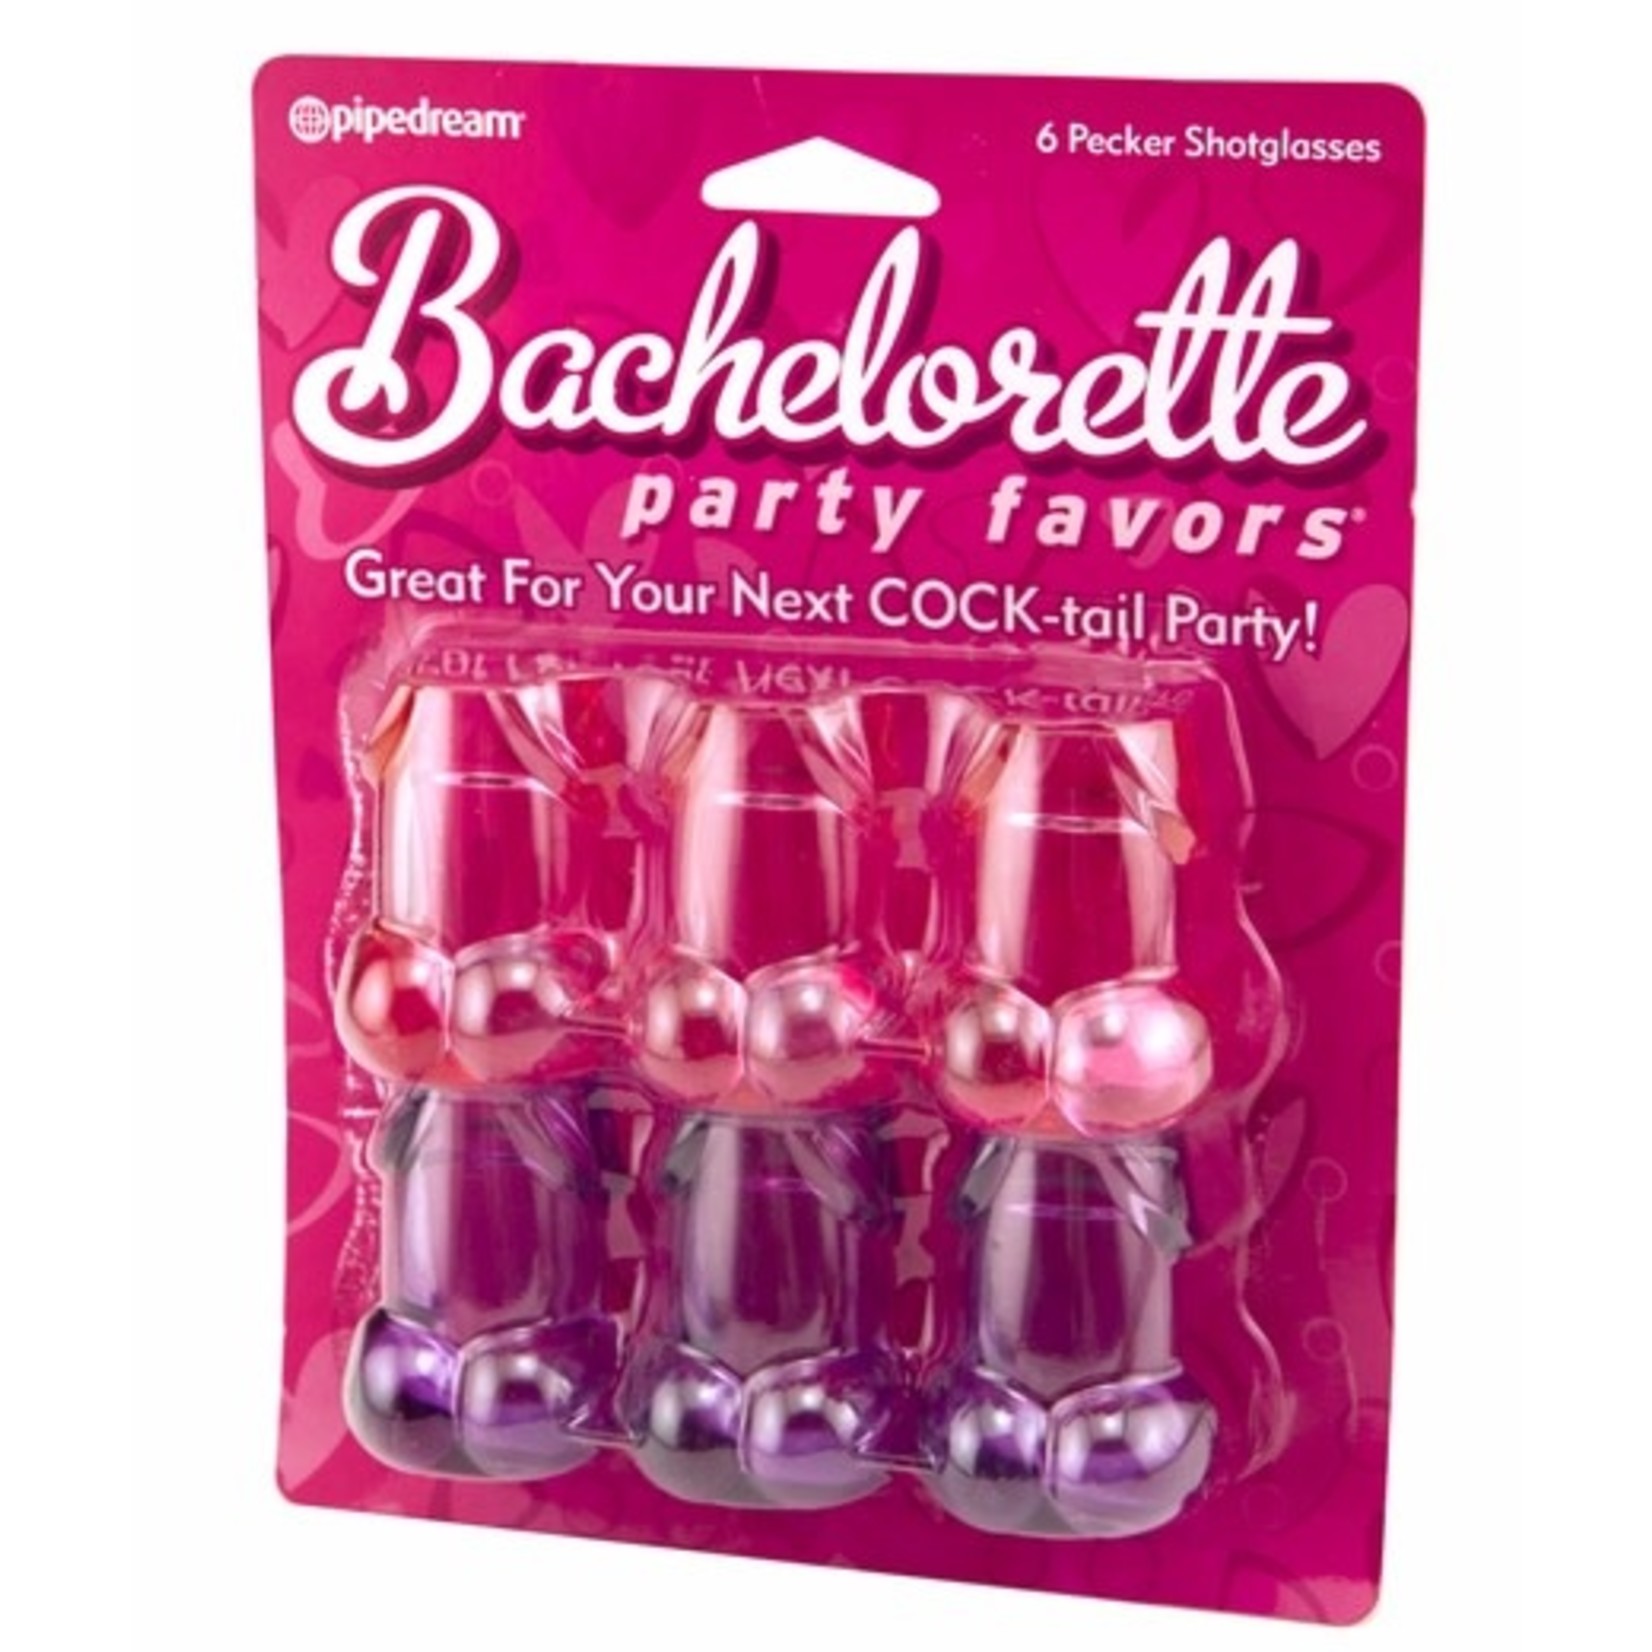 Bachelorette Party Favors Pecker Shot Glasses (6 per Set) - Pink/Purple